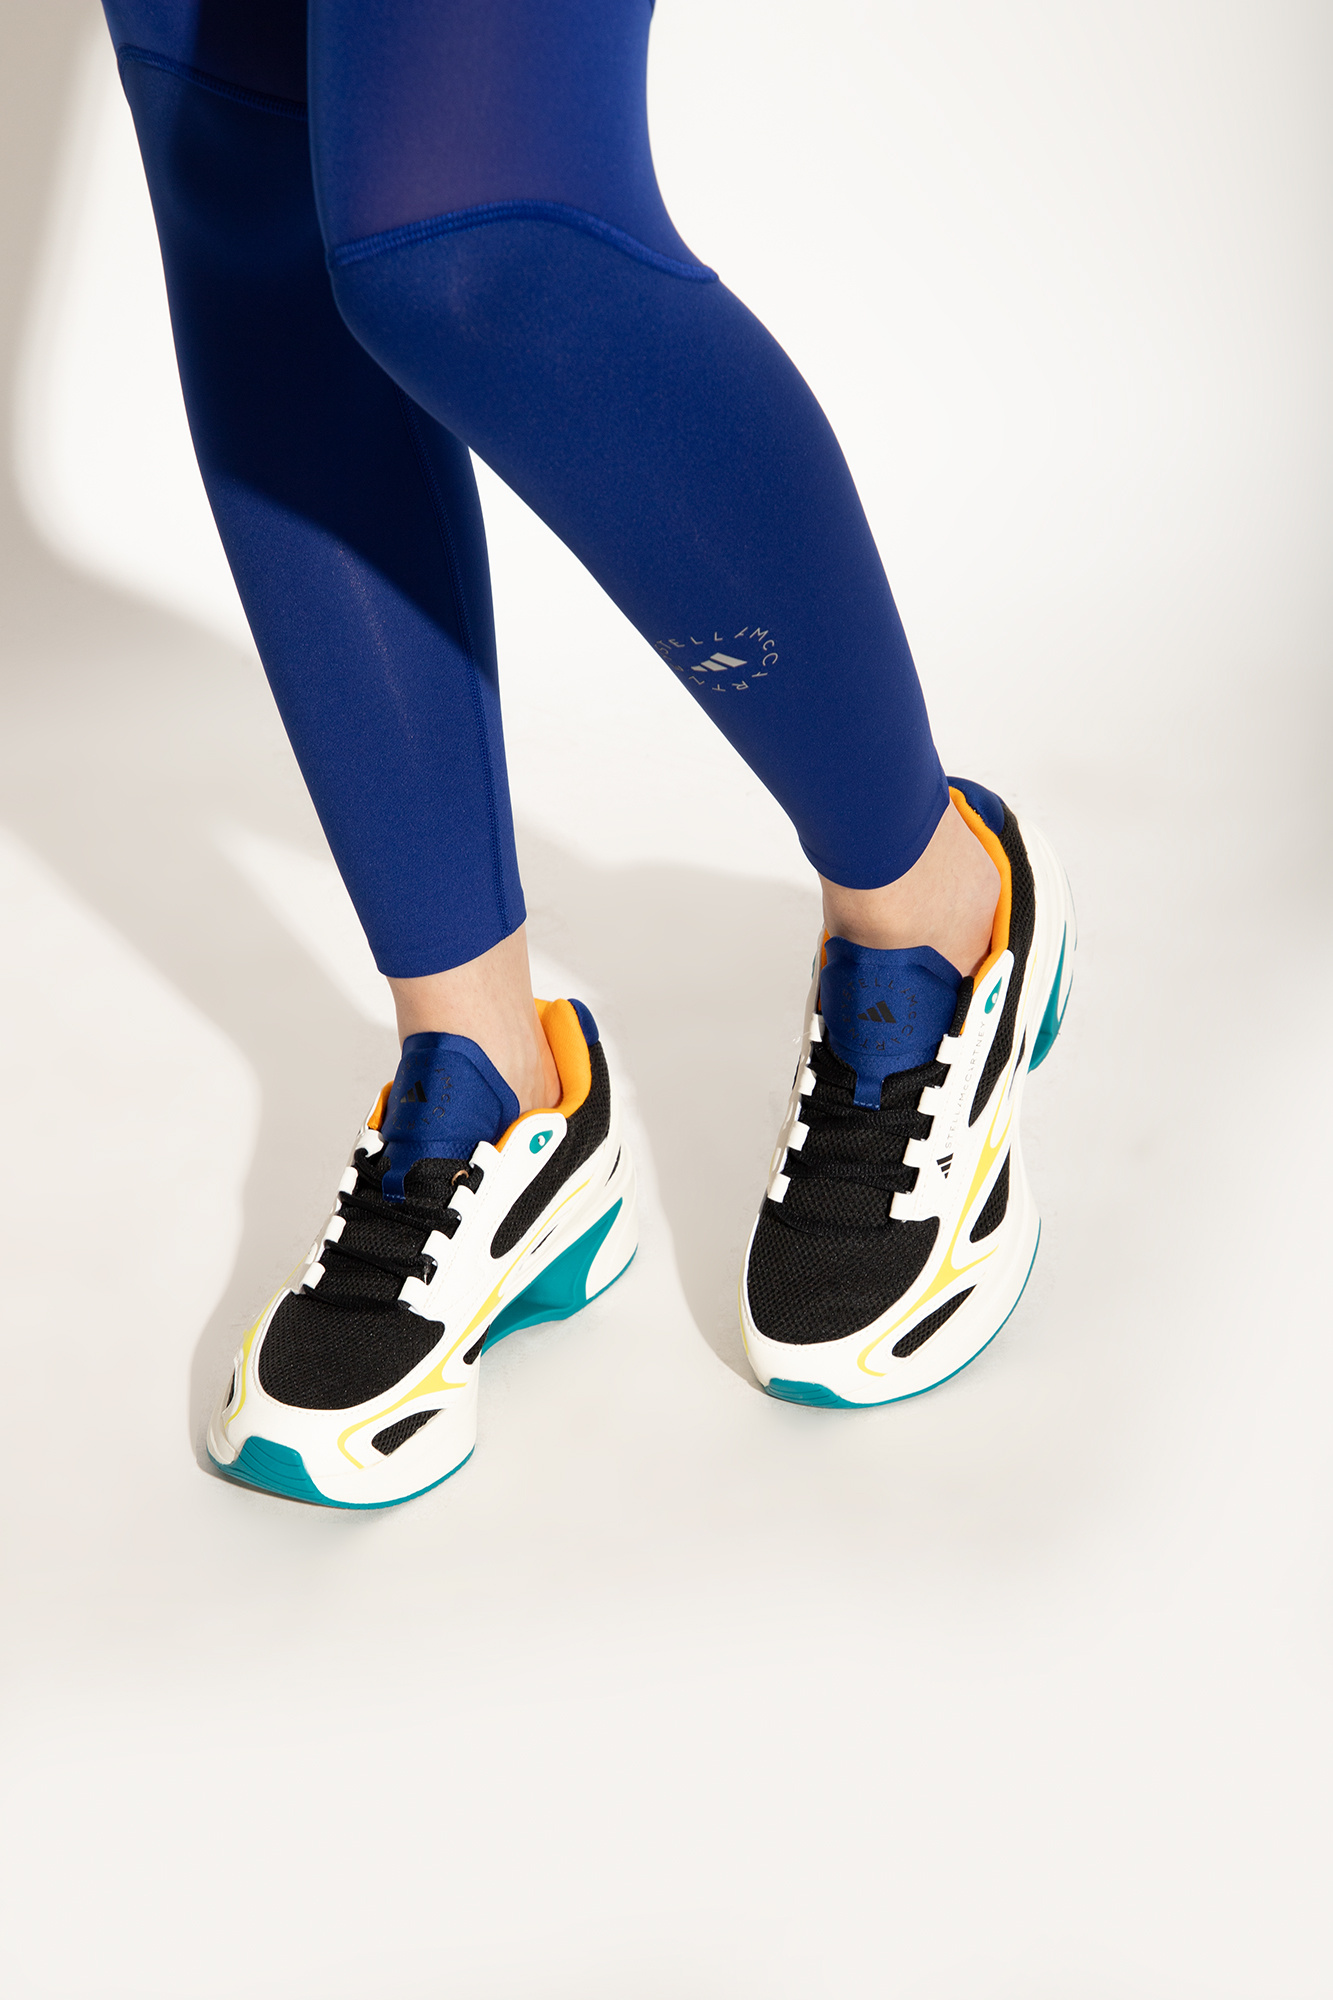 adidas by Stella McCartney Sportswear for Women